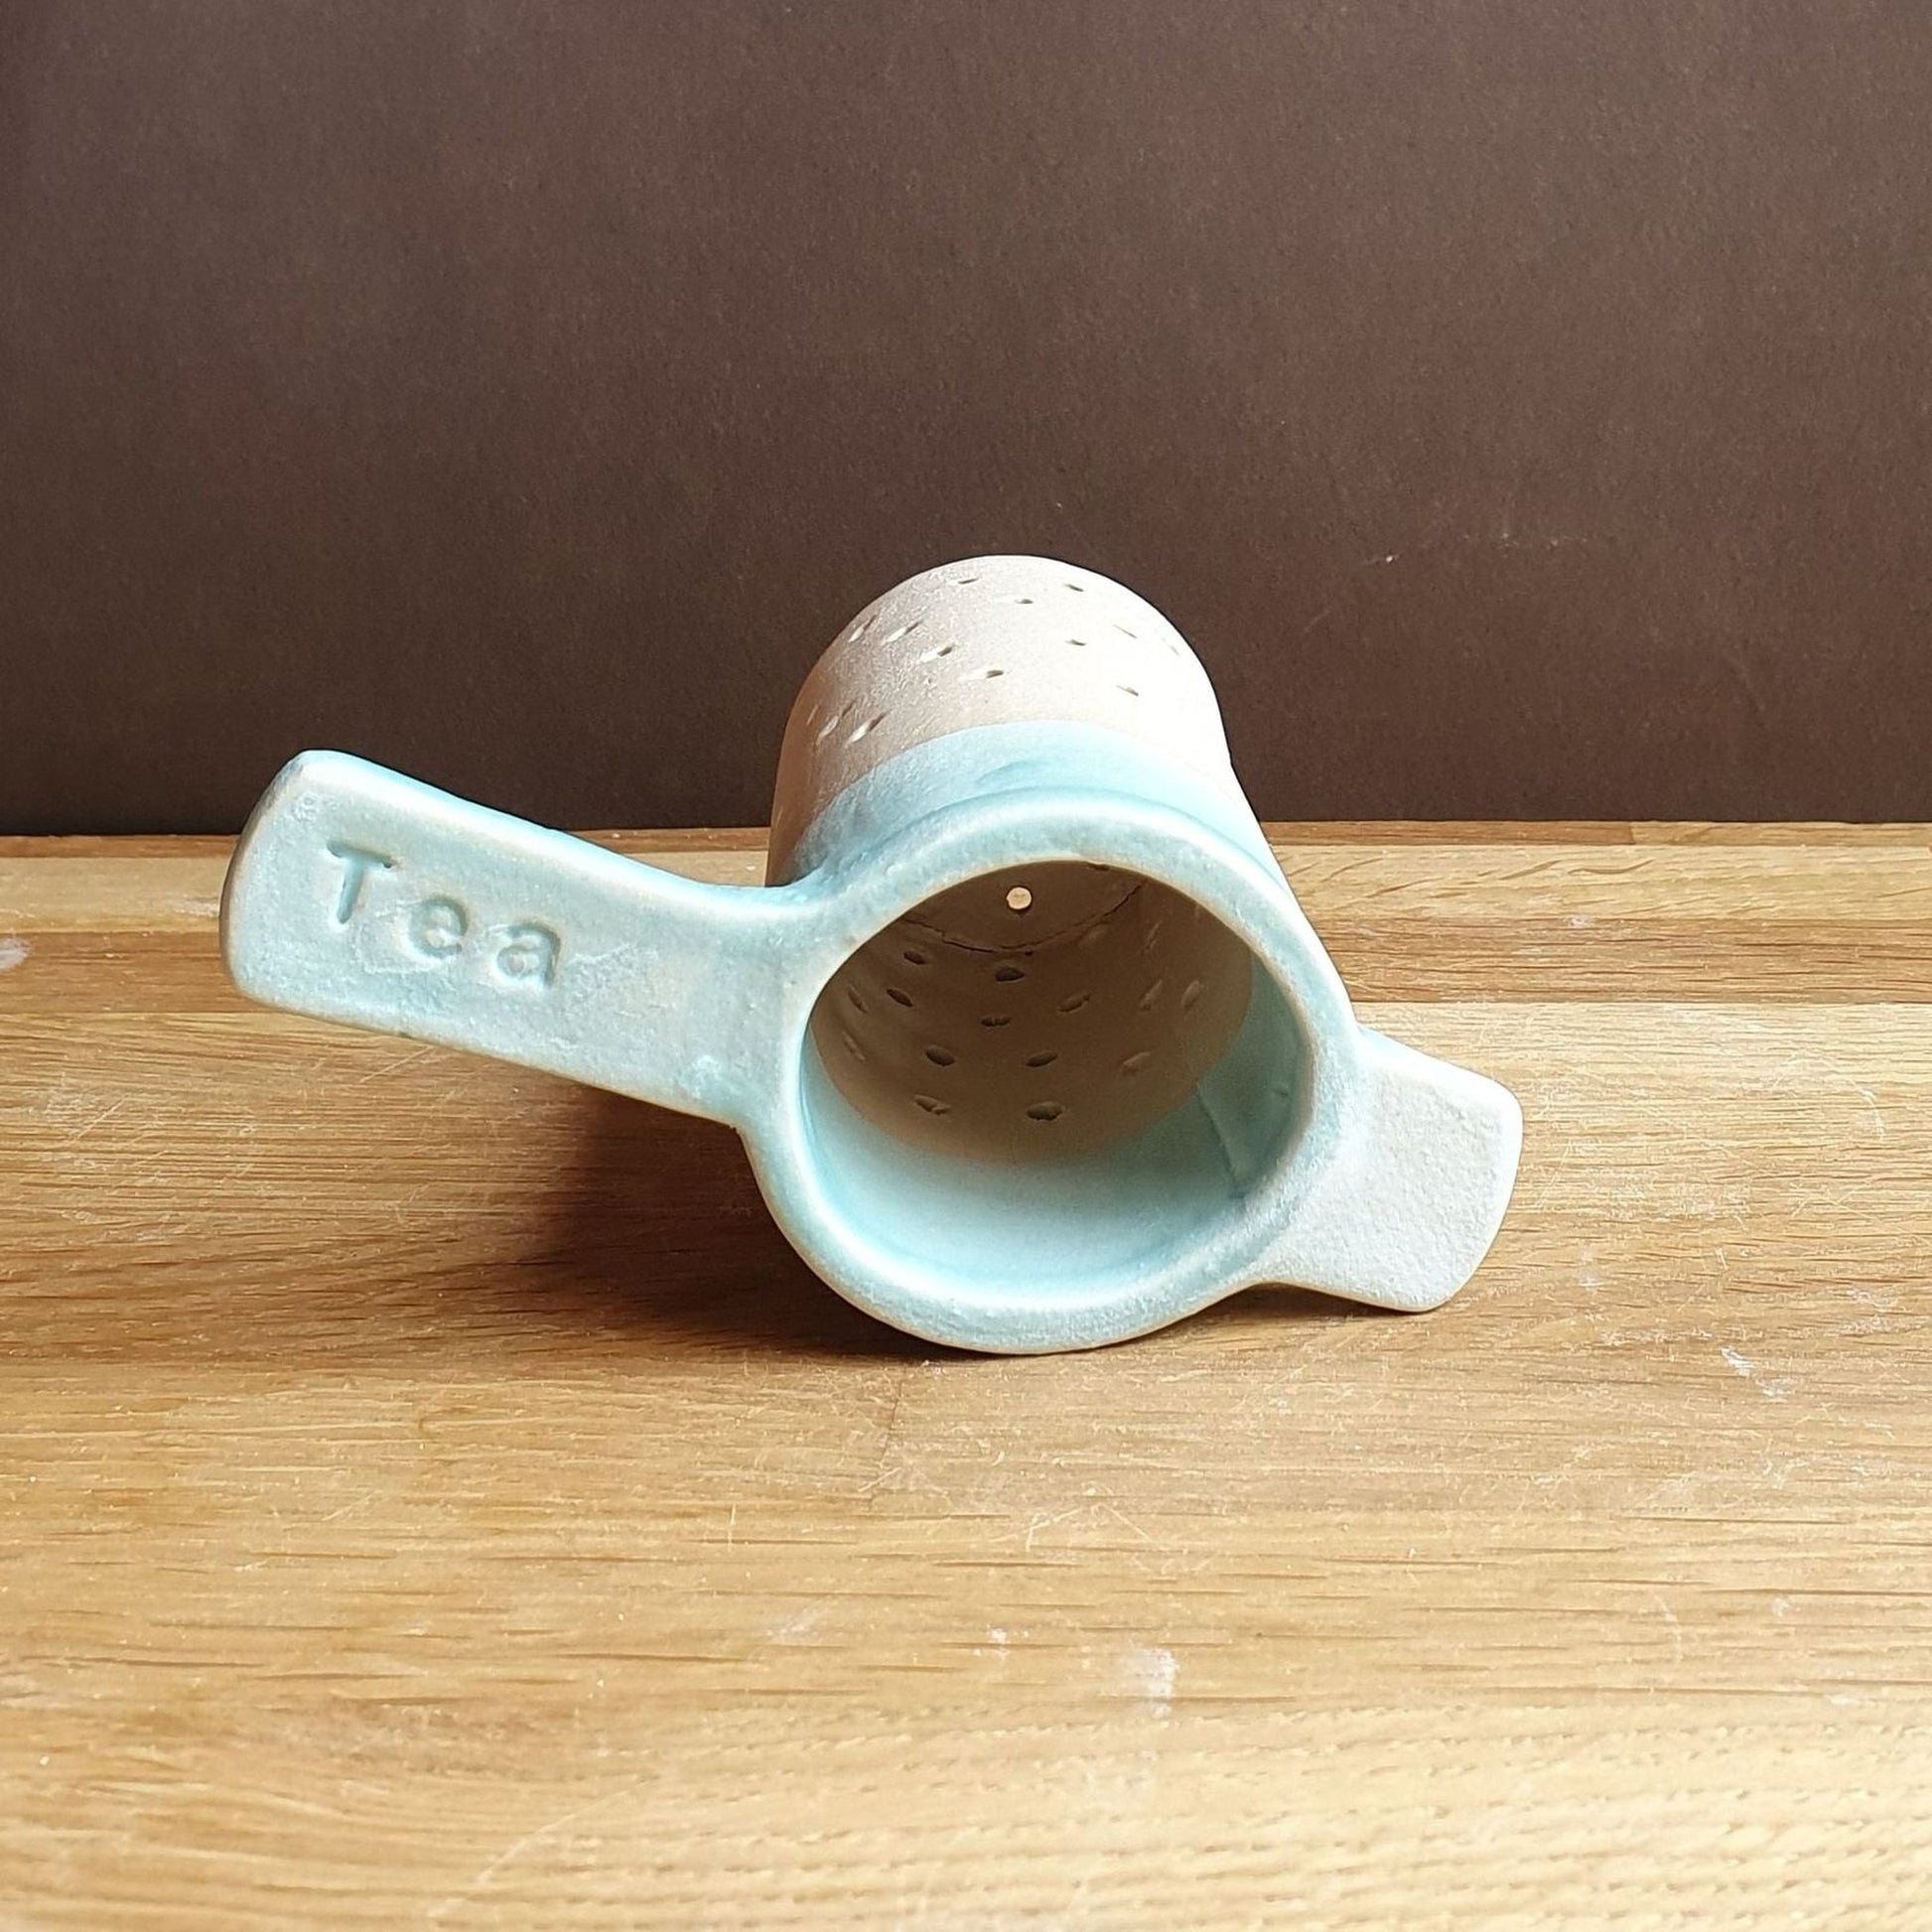 Handmade stoneware tea infuser